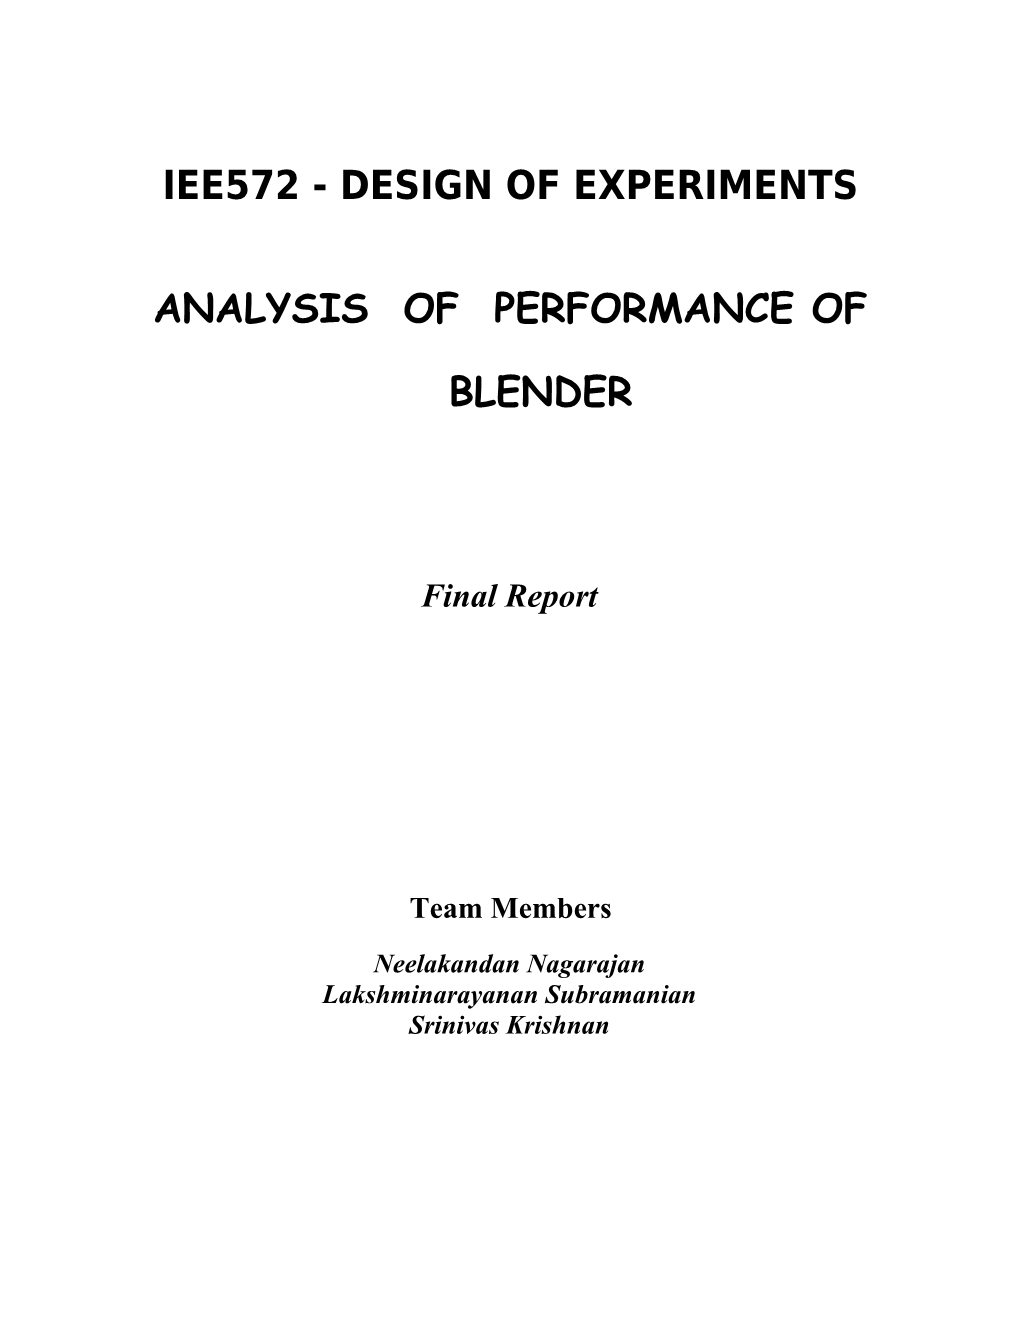 Iee572 - Design of Experiments